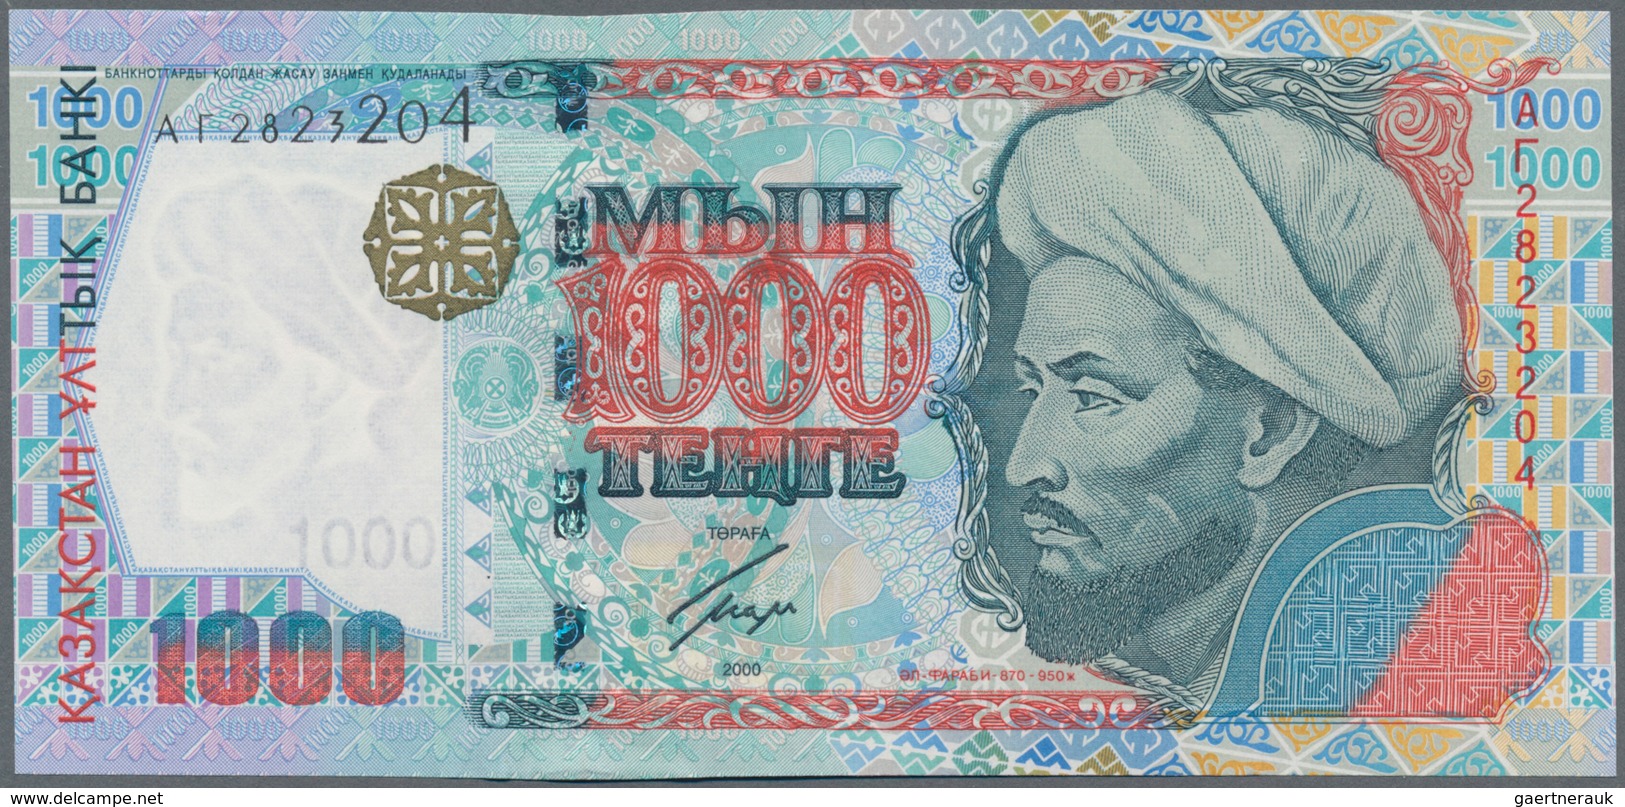 Kazakhstan / Kasachstan: Lot with 7 banknotes comprising 2x 200 Tenge 1999 P.20a,b (UNC), 2x 500 Ten